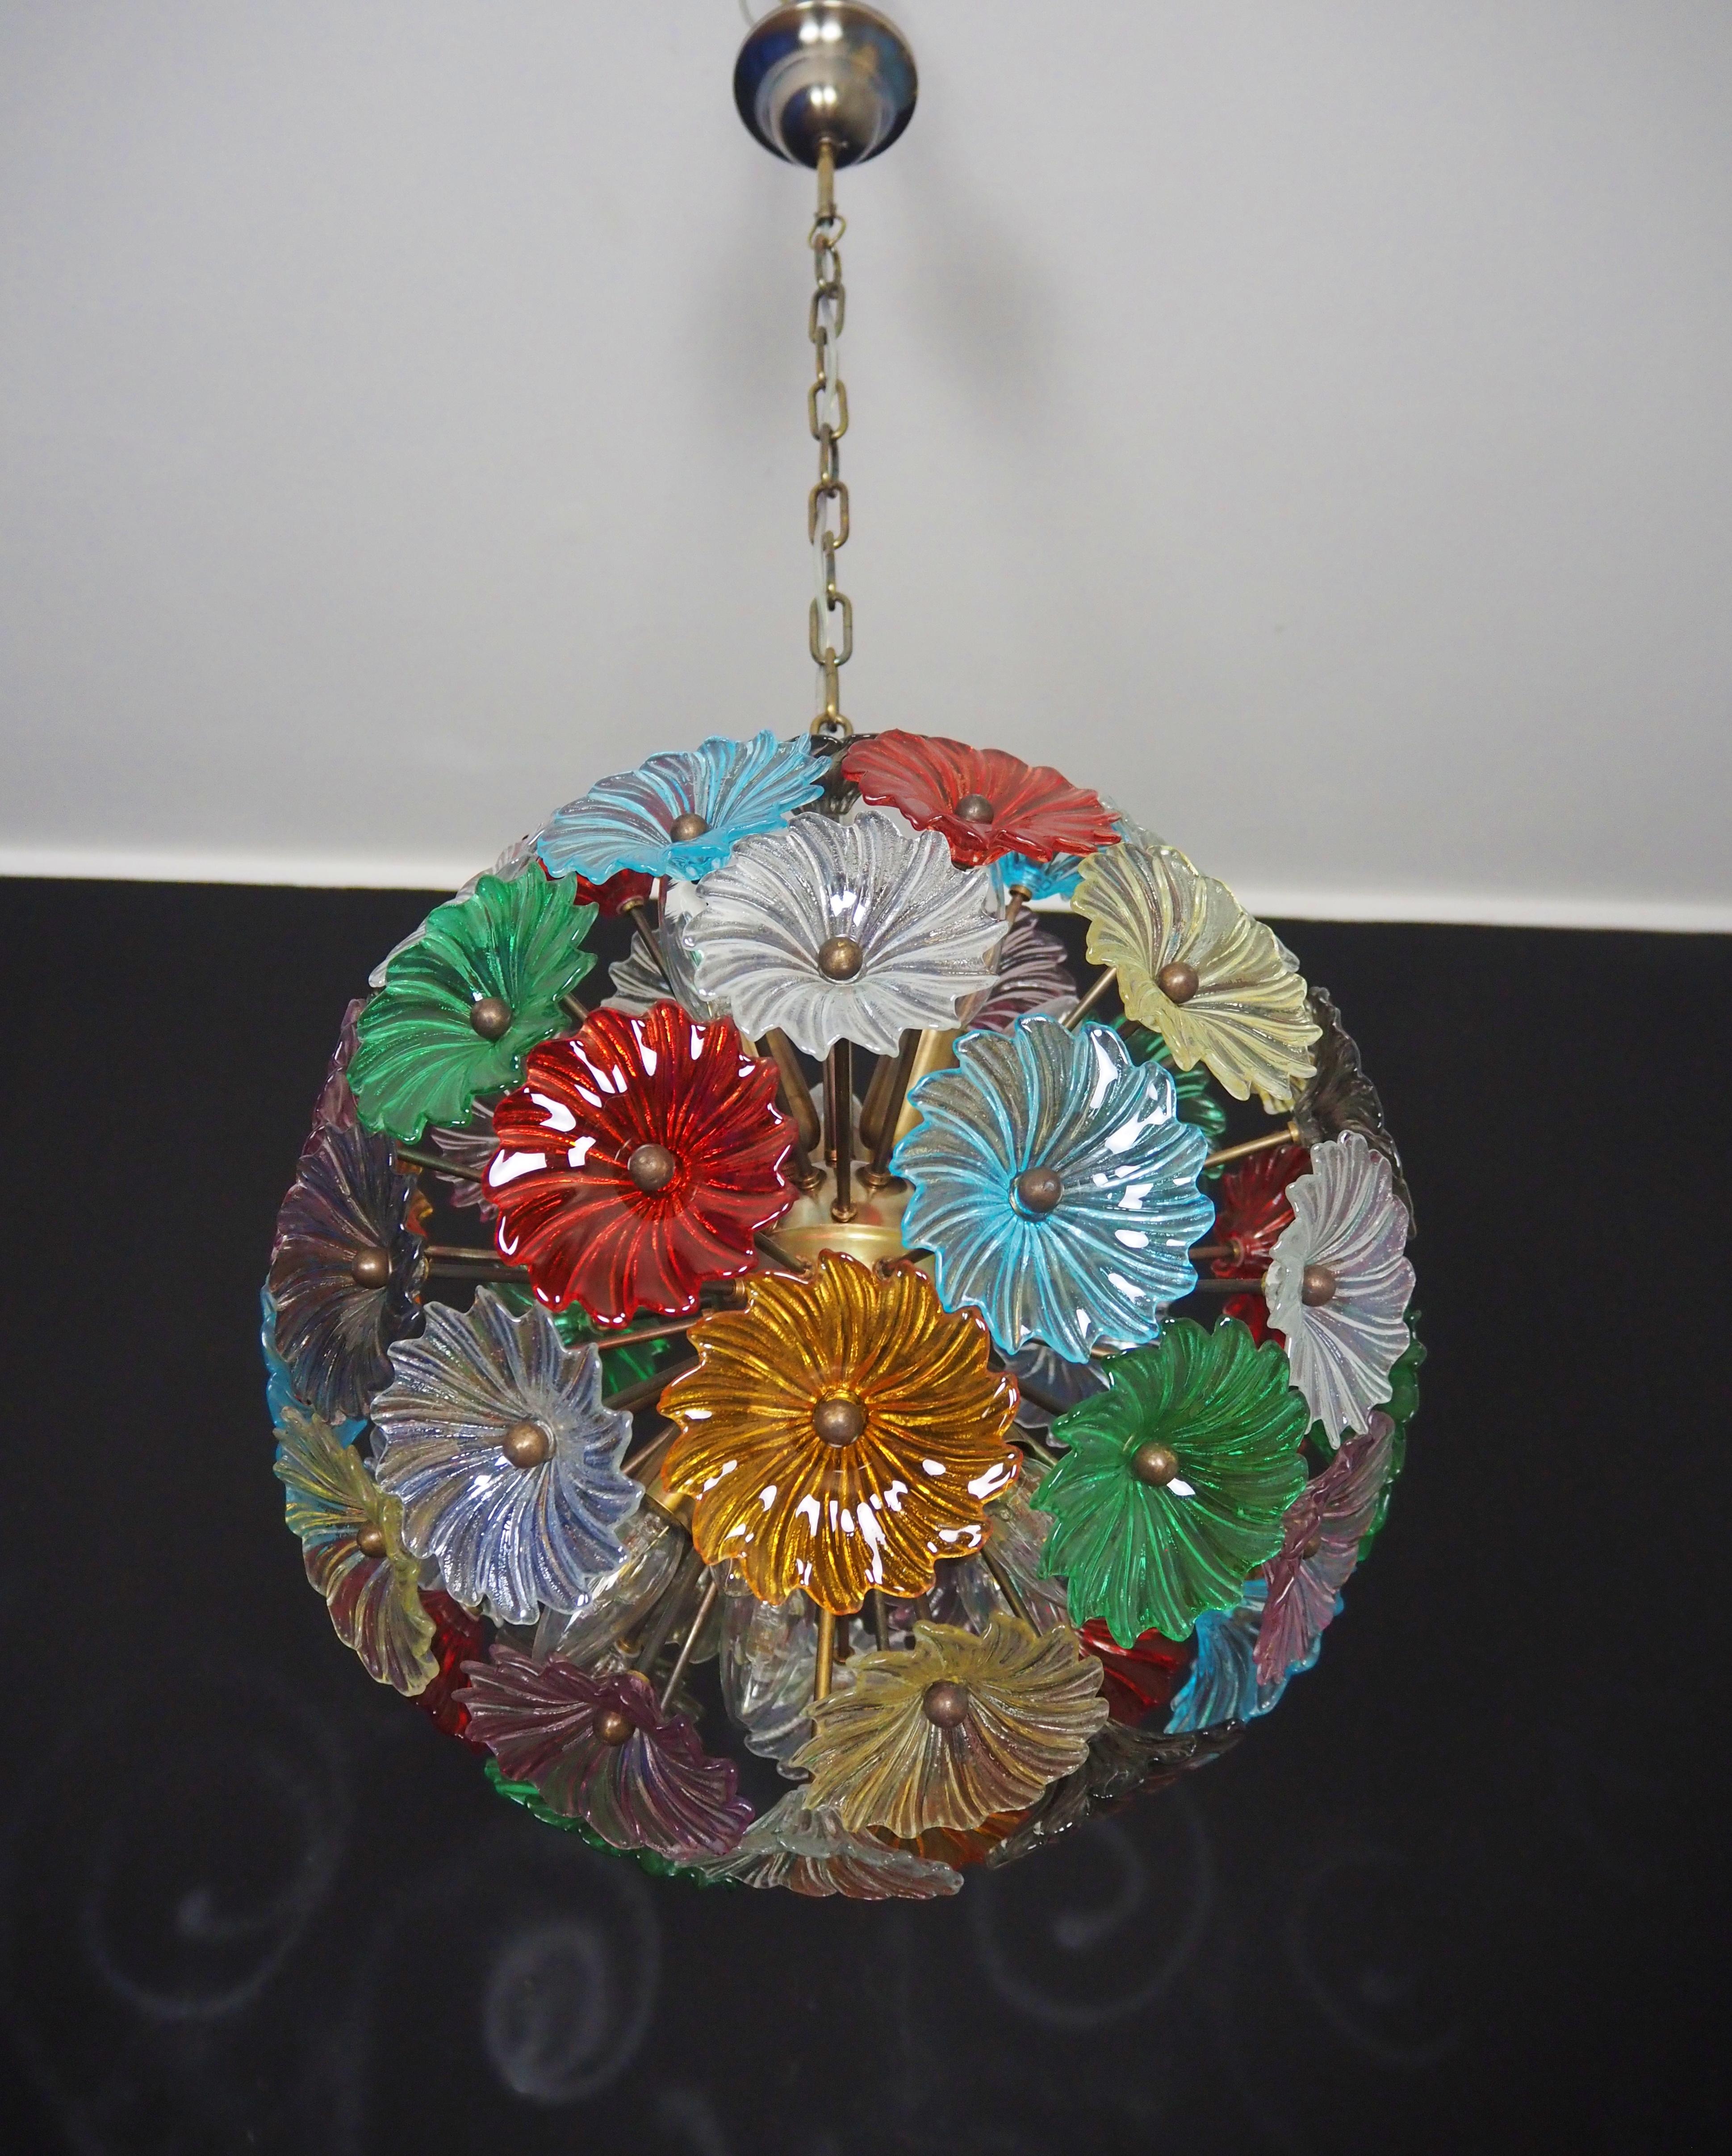 Vintage Sputnik Italian crystal chandelier - 51 Daisy multicolored glasses For Sale 7